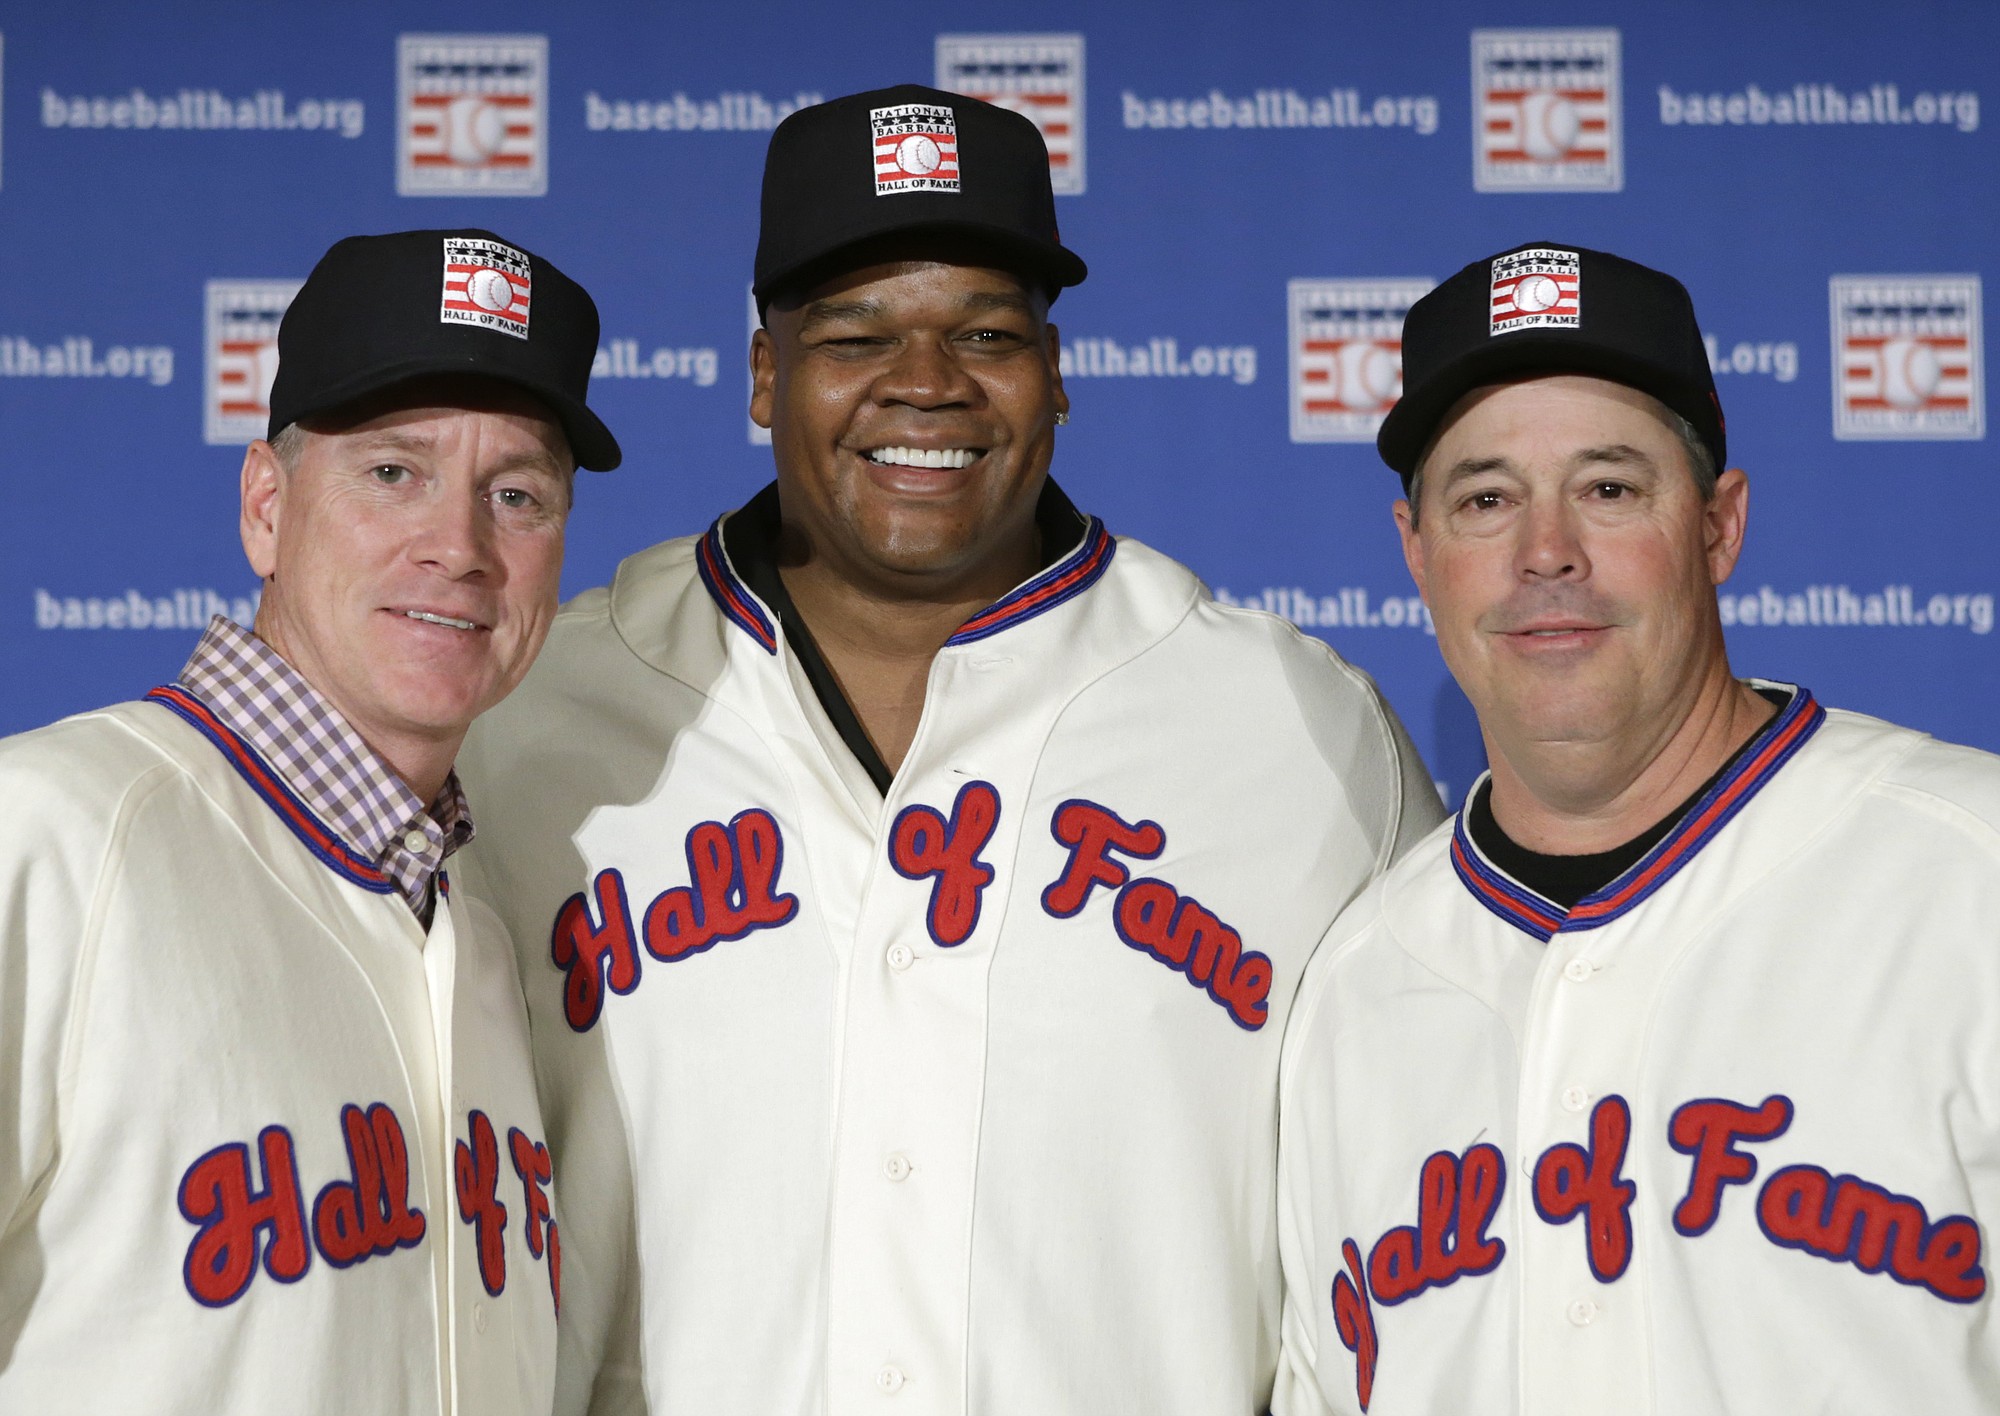 Former Atlanta Braves pitchers Tom Glavine, left, and Greg Maddux, right, pose with Chicago White Sox slugger Frank Thomas.